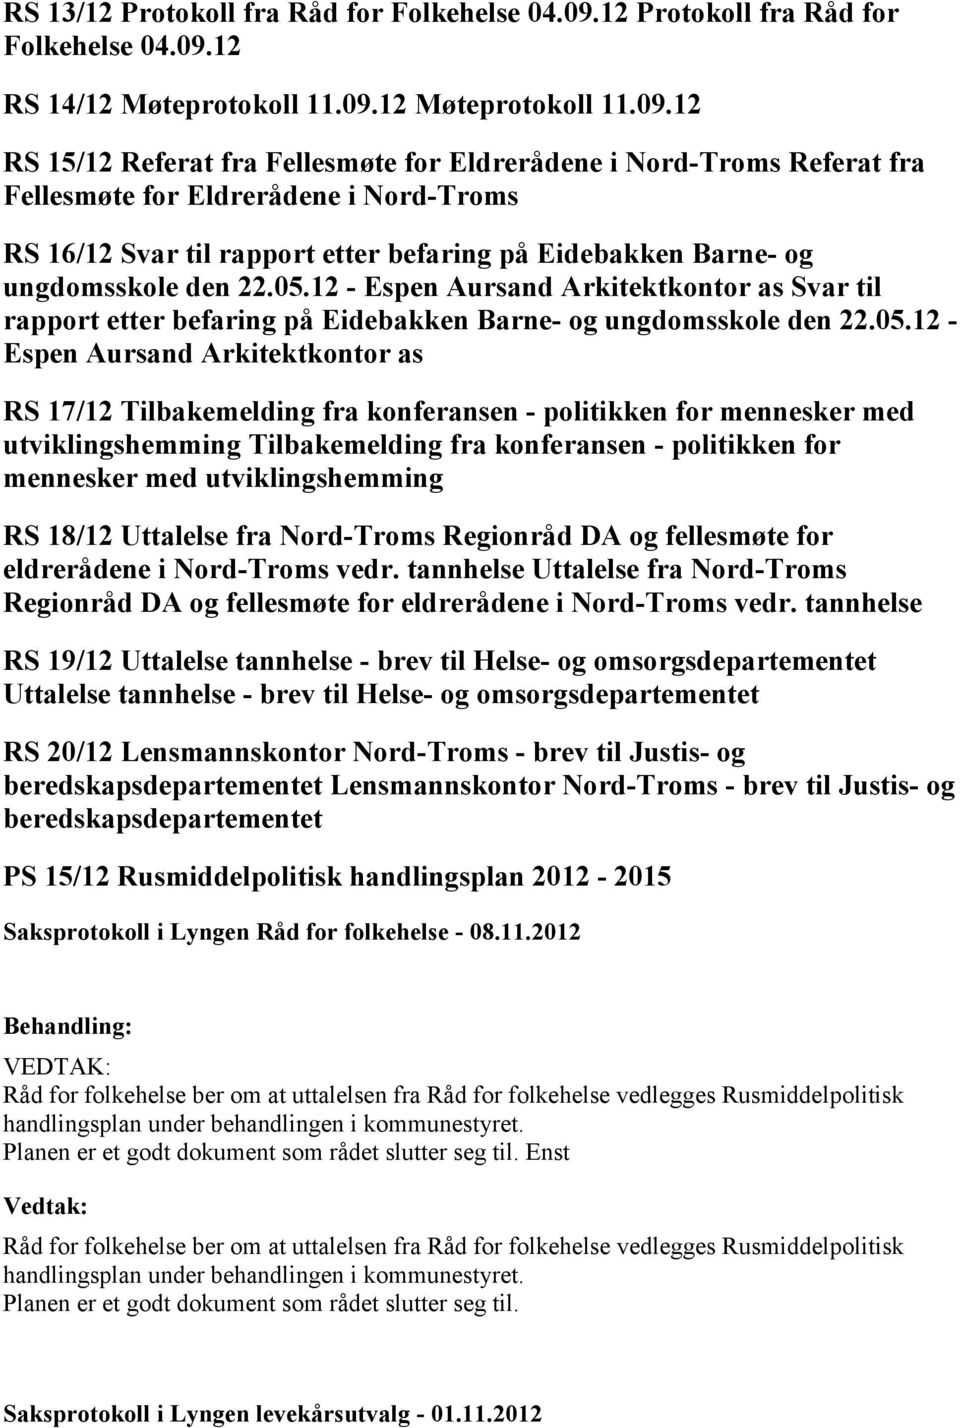 12 RS 14/12 Møteprotokoll 11.09.